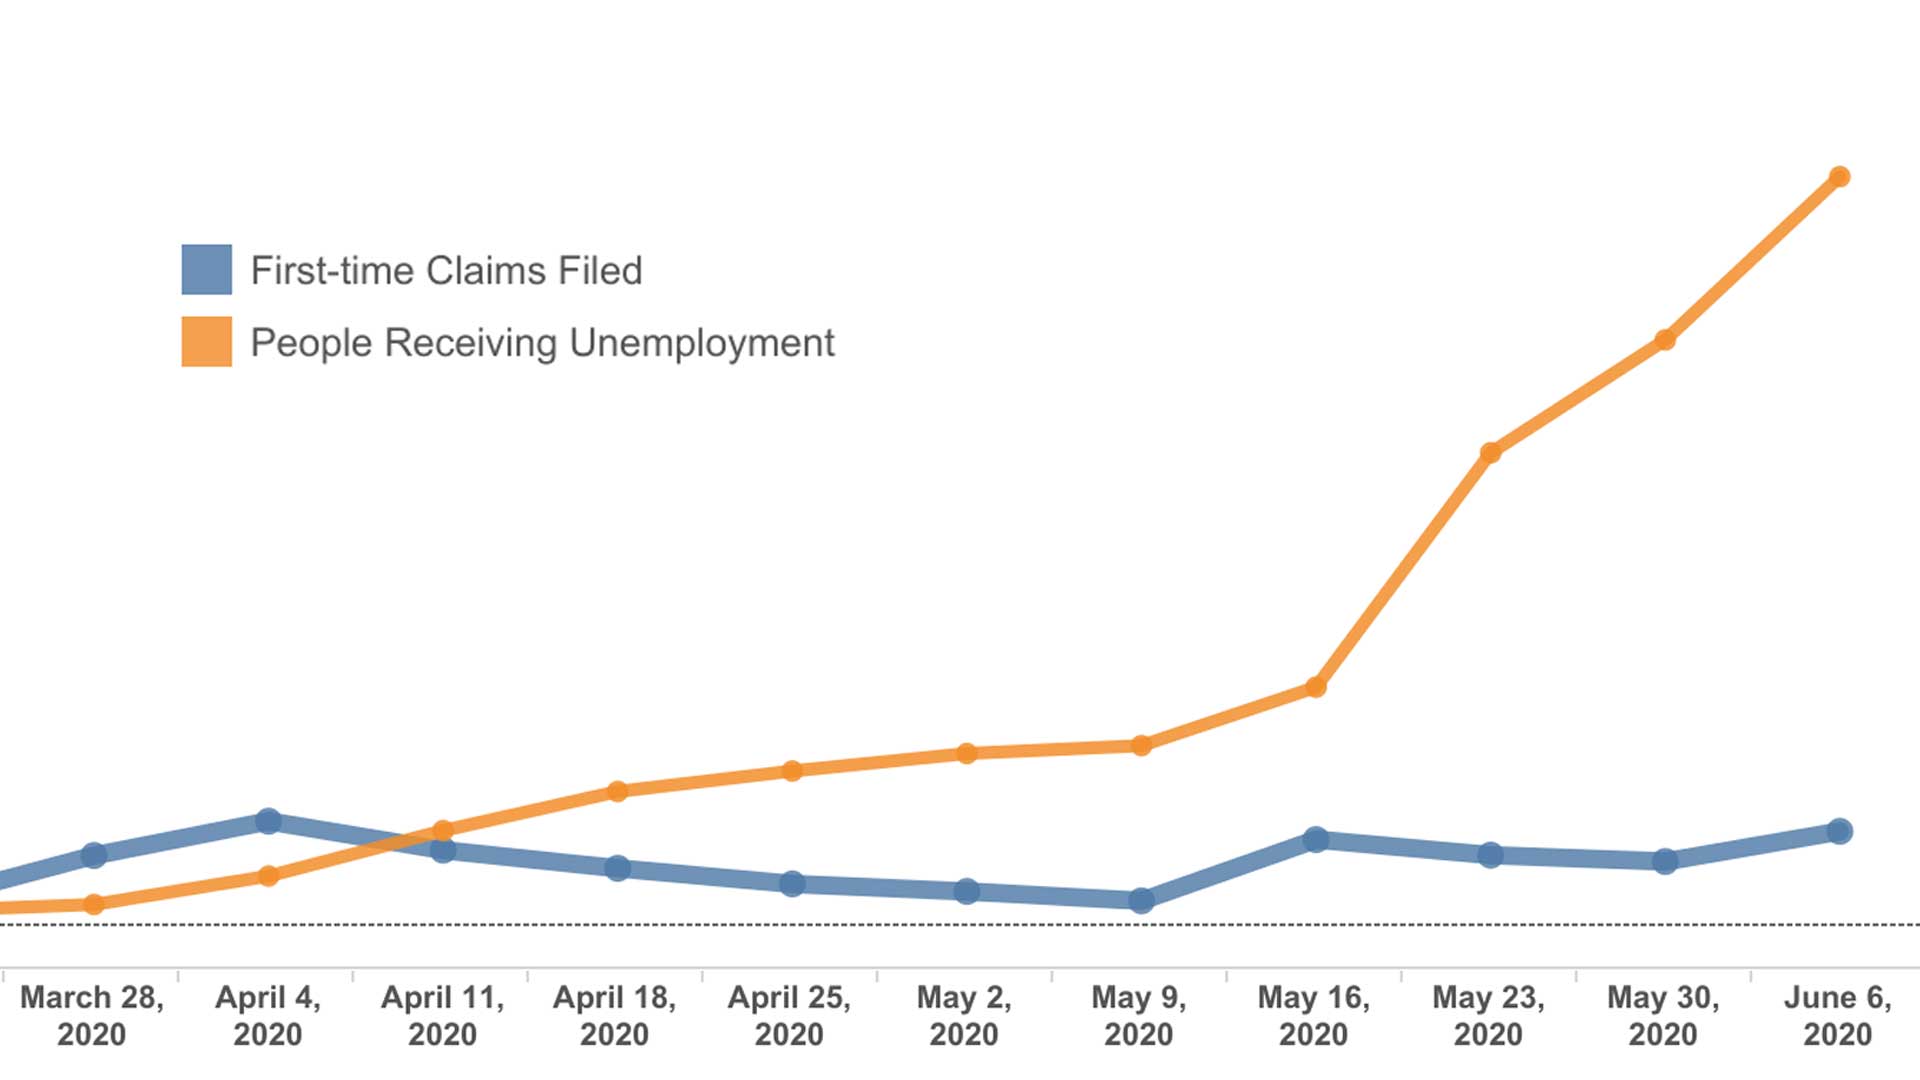 Arizona employment numbers ending June 6.